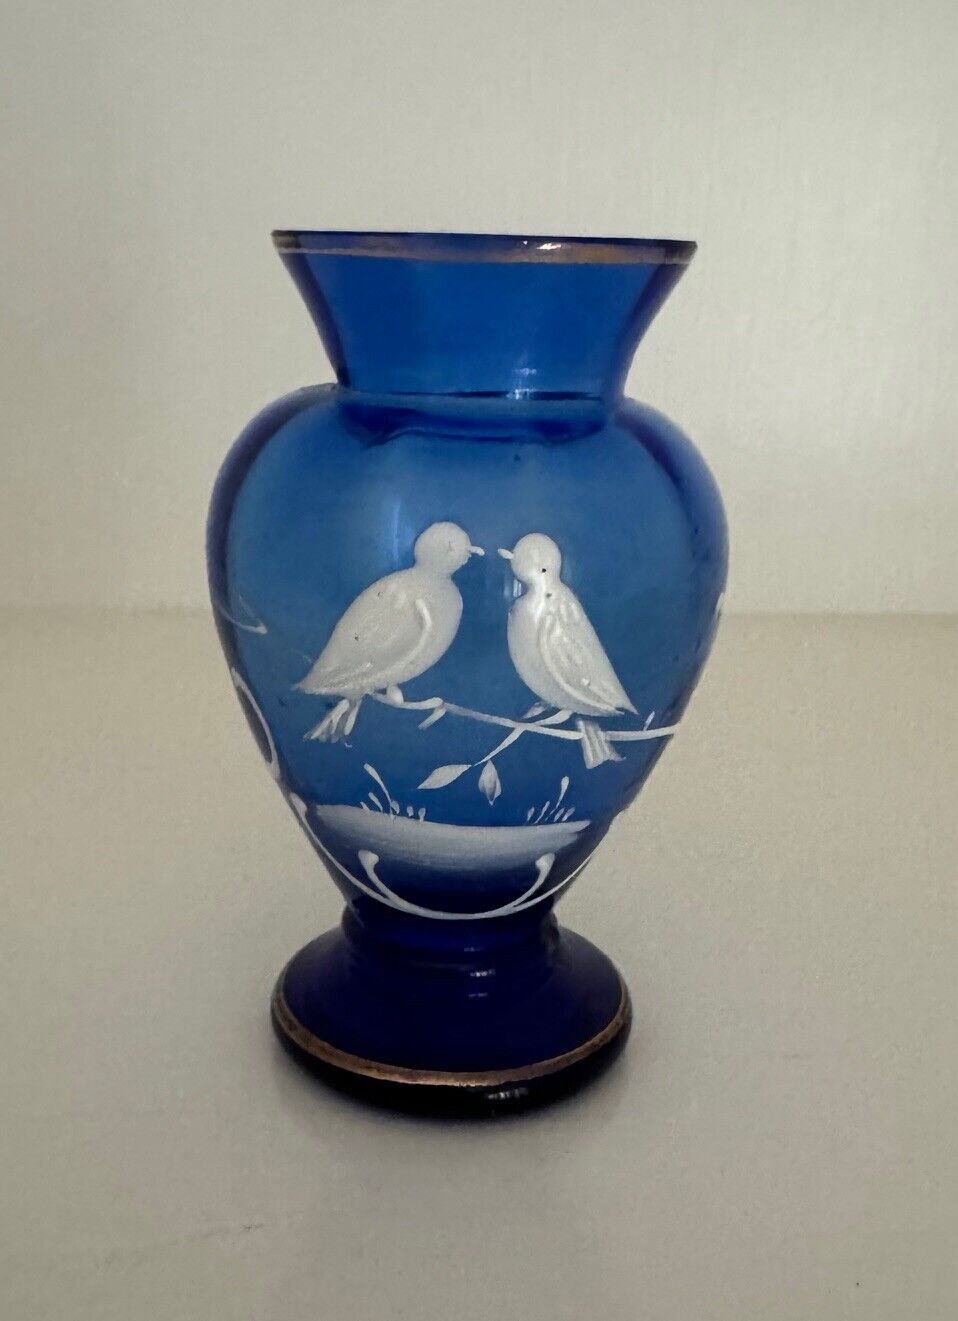  UNIQUE VINTAGE LATE 1940\'S SMALL GERMAN BLUE GLASS VASE WITH 2 BIRDS MOTIF